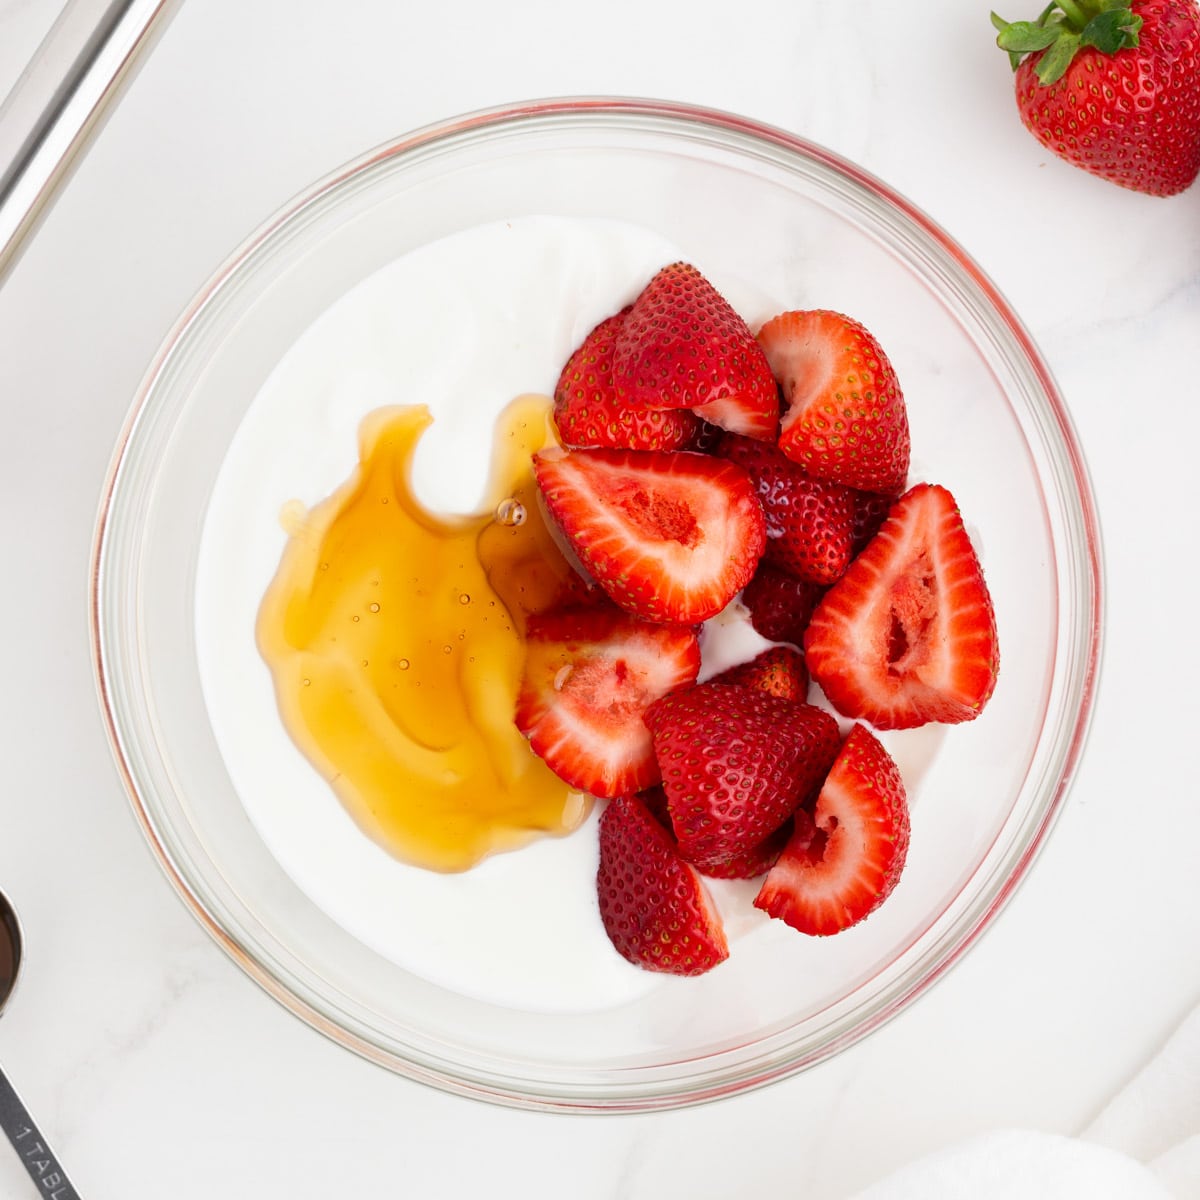 yogurt, honey and strawberries in a bowl